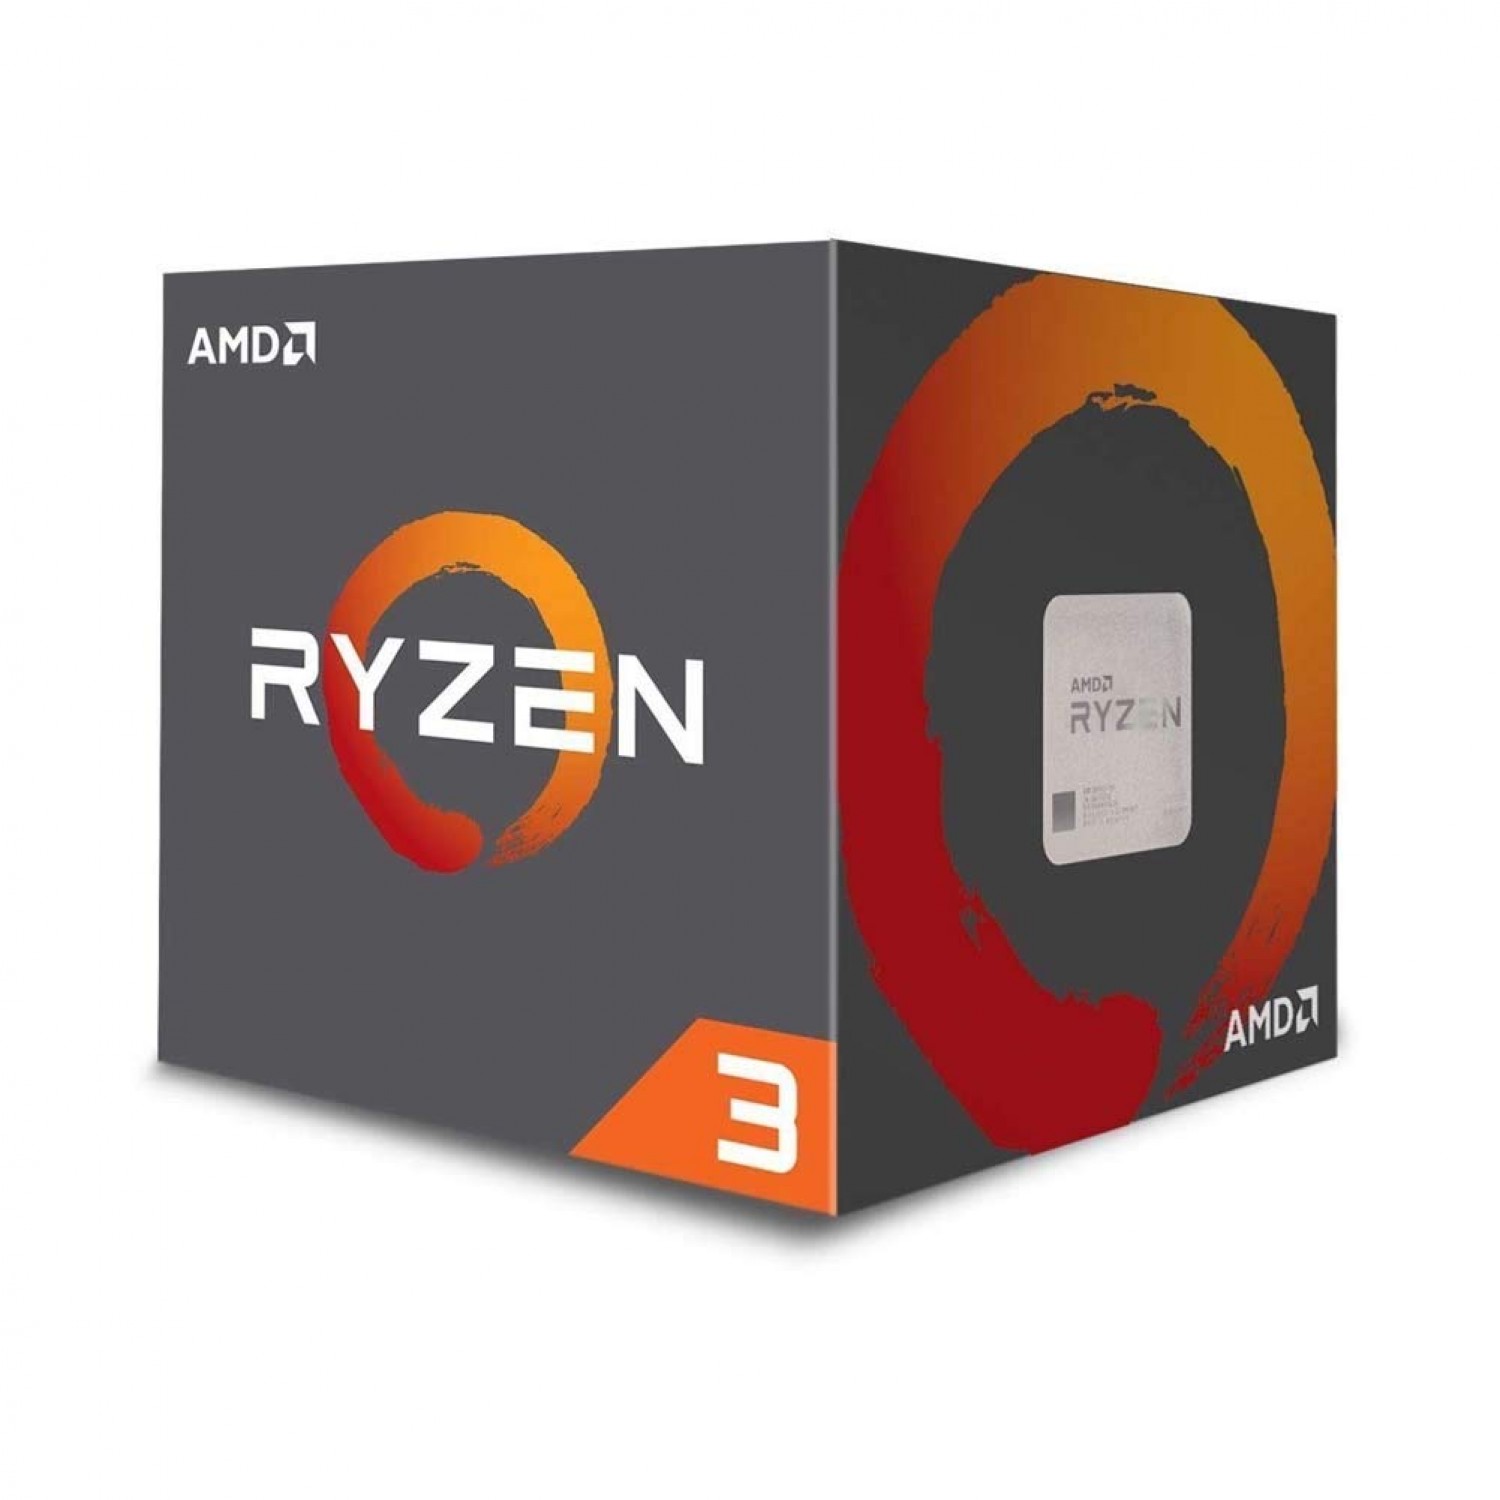 پردازنده AMD Ryzen 3 2300X